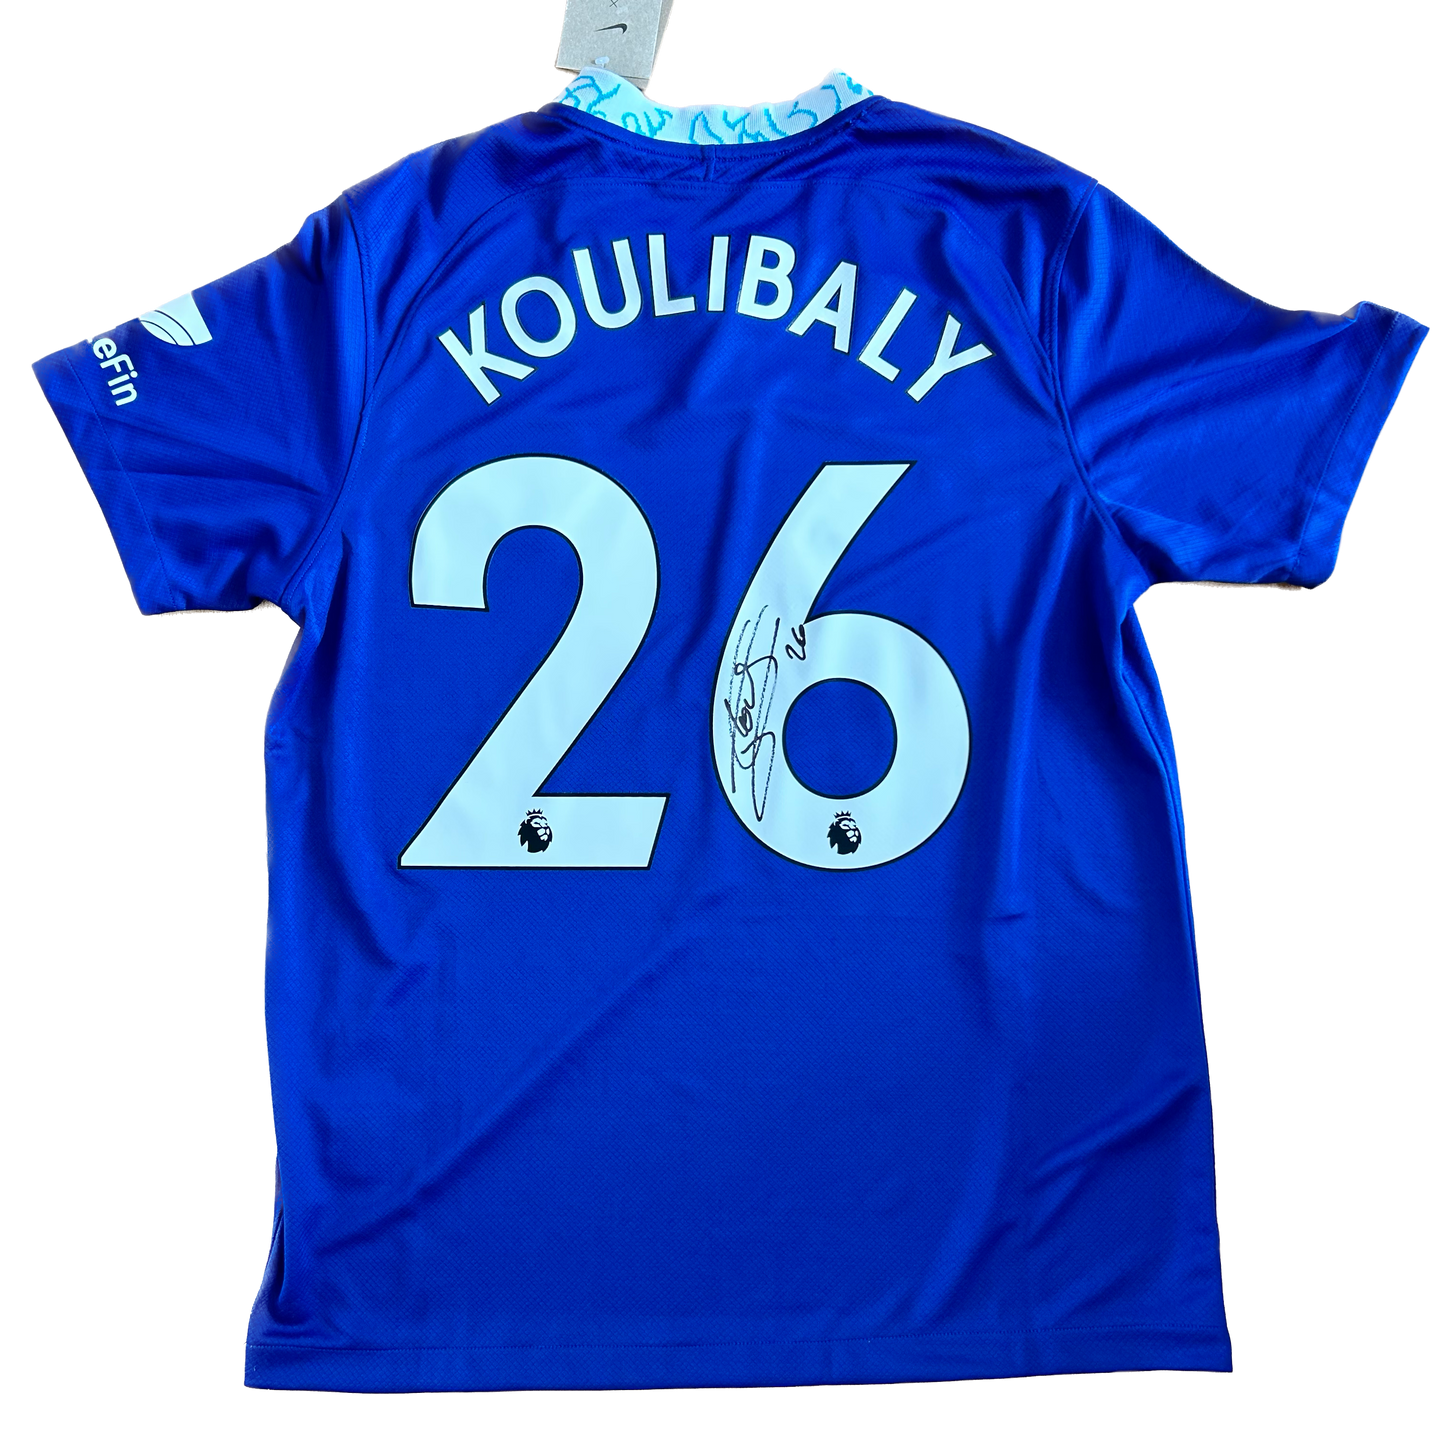 Signed Koulibaly Chelsea Home Shirt 22/23